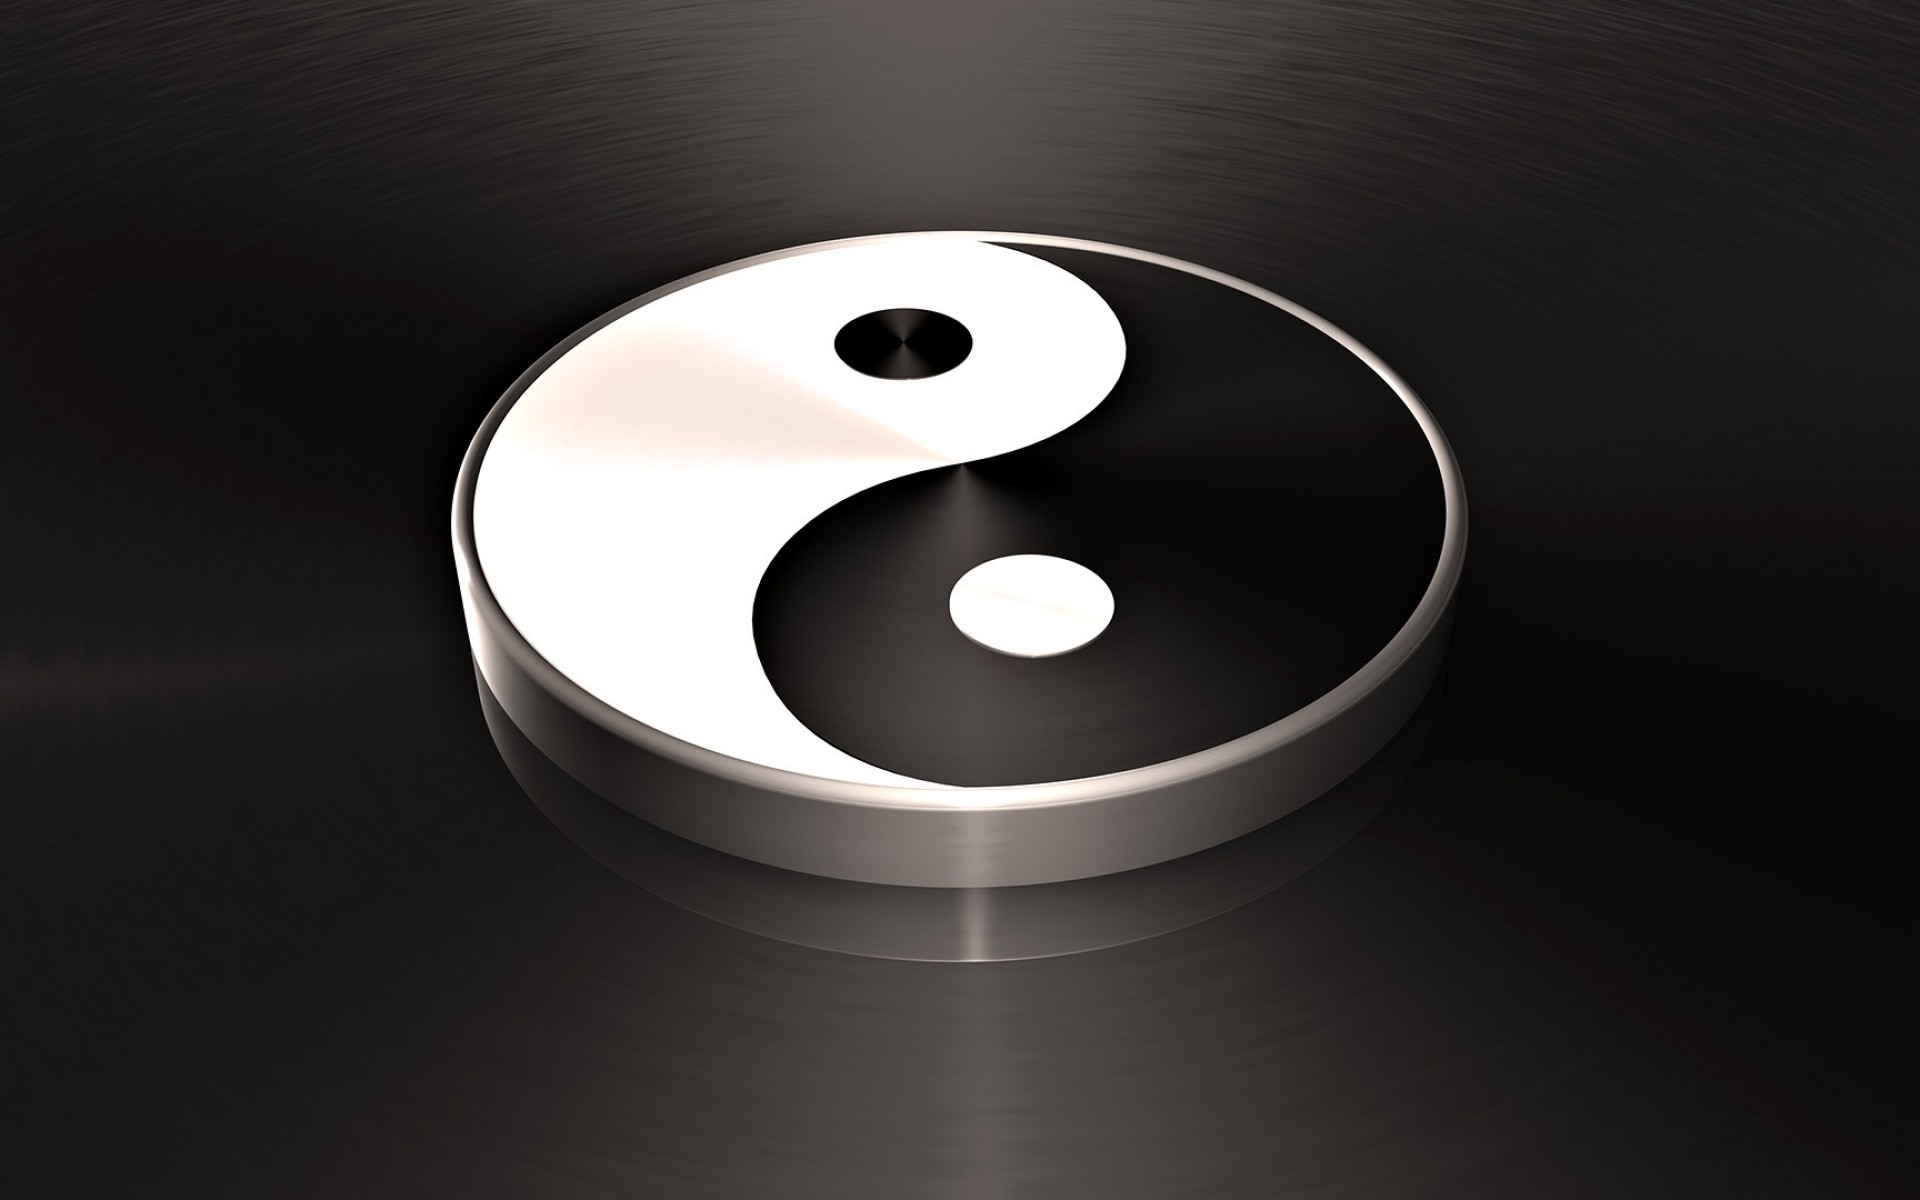 3d, black, religious, yin & yang, minimalist